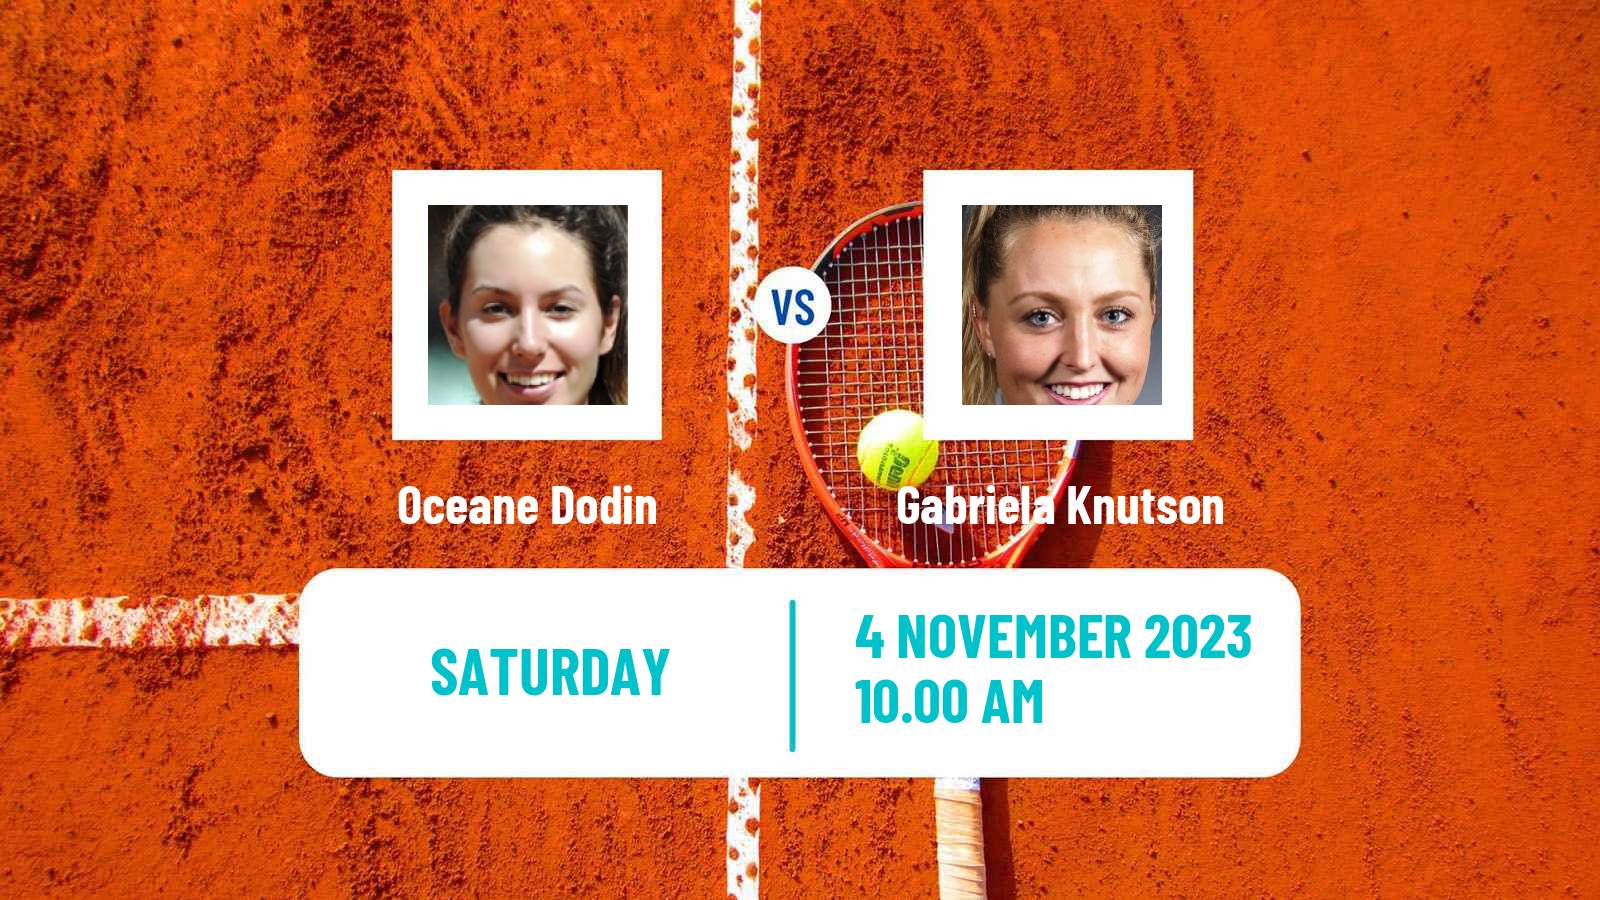 Tennis ITF W60 Nantes Women Oceane Dodin - Gabriela Knutson